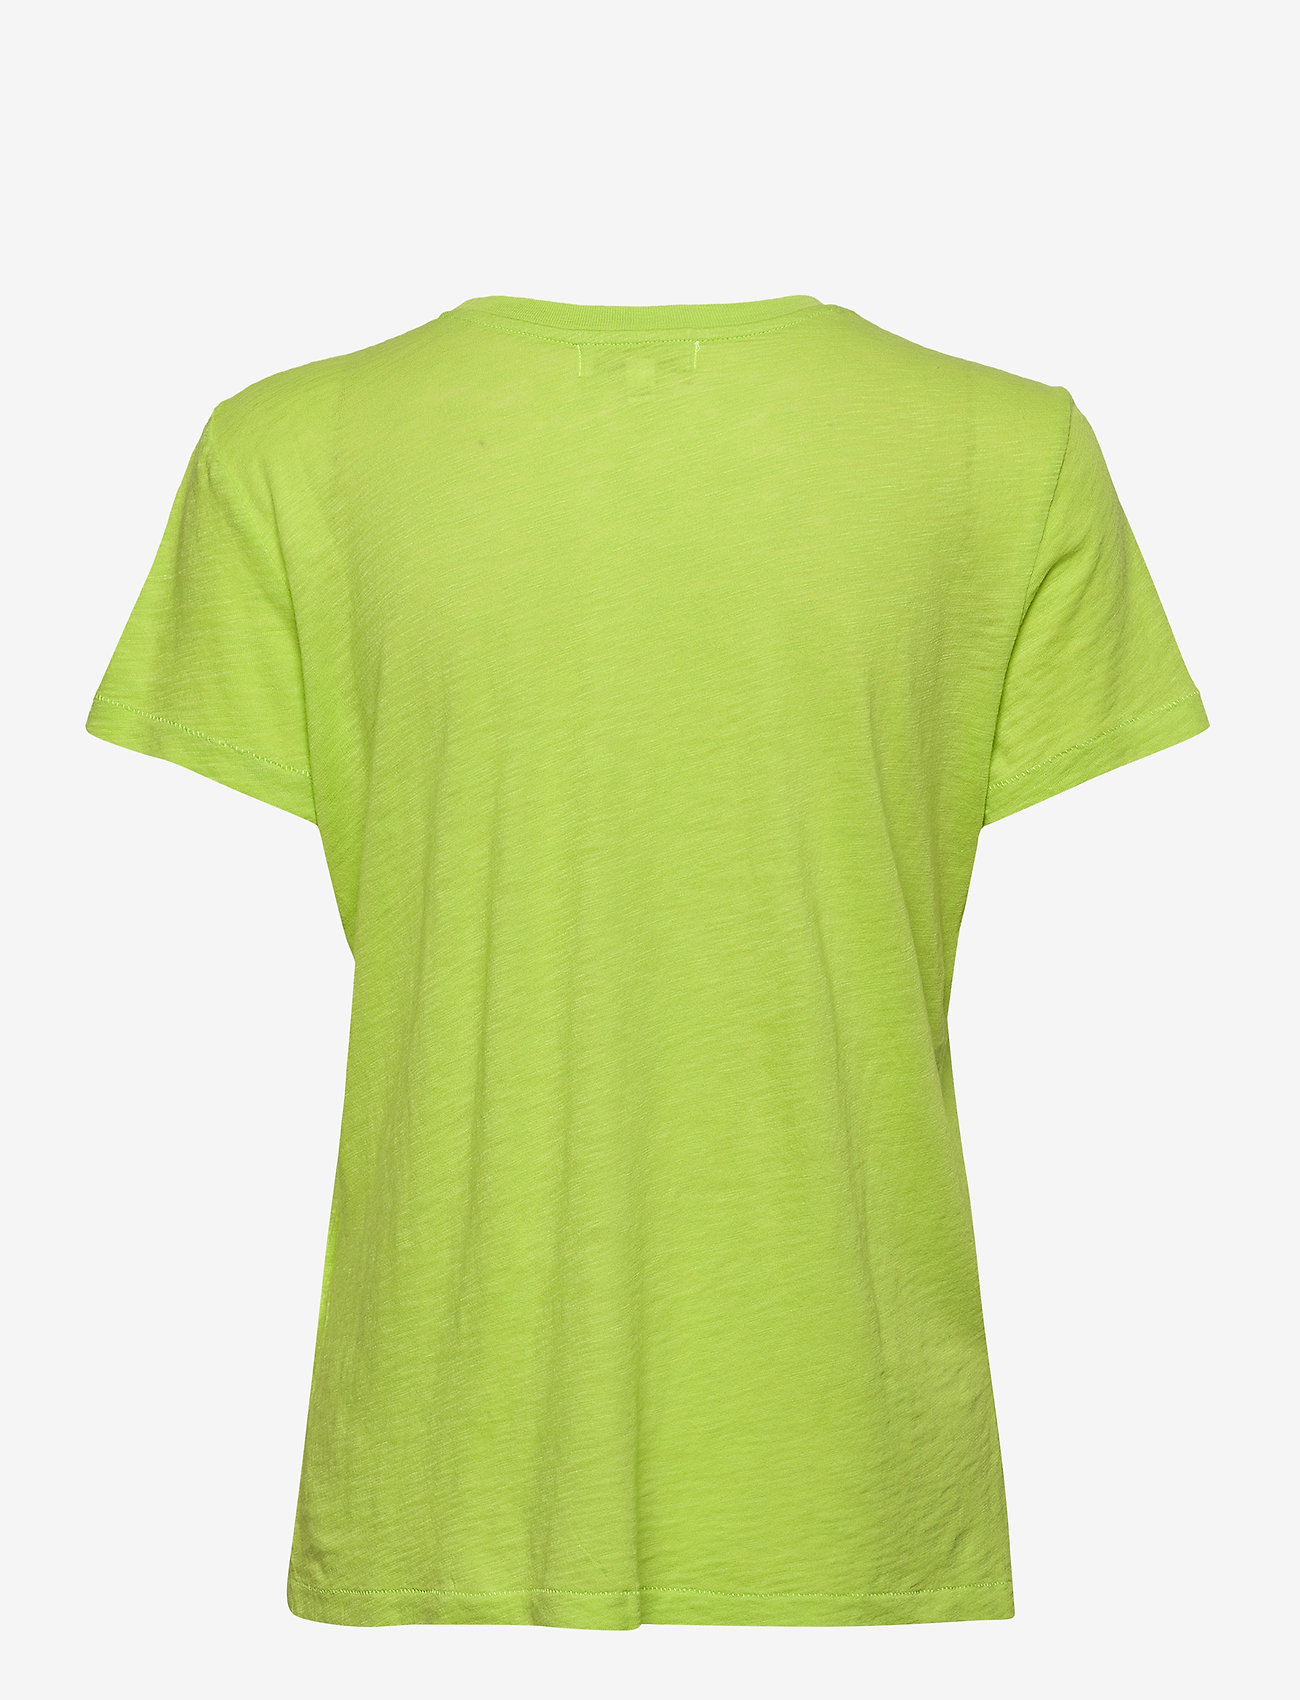 PJ Salvage - s/s shirt - tops - lime green - 1